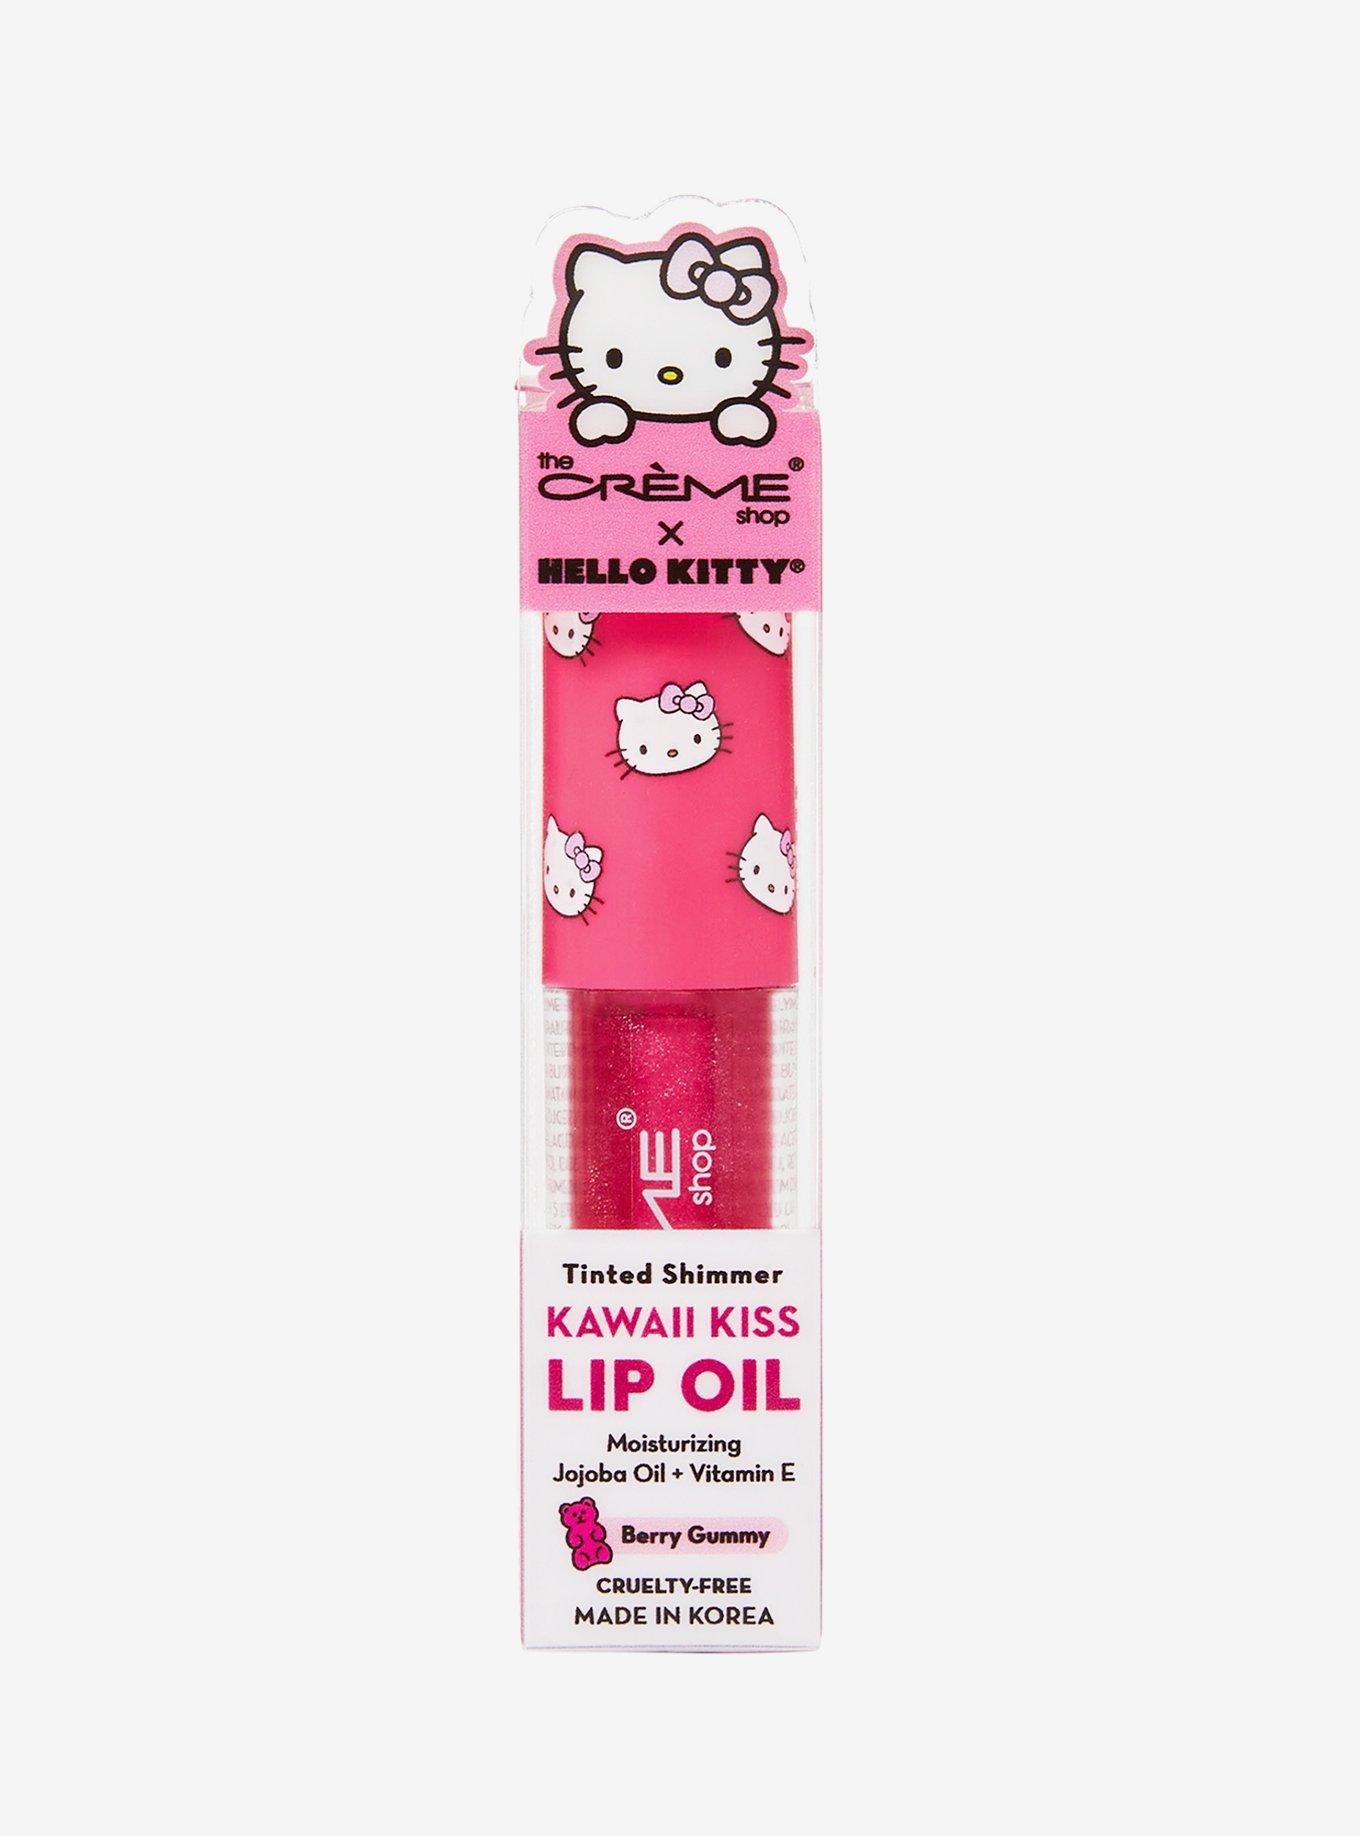 Crème Shop Sanrio Hello Kitty Kawaii Kiss Berry Gummy Tinted Shimmer Lip Oil